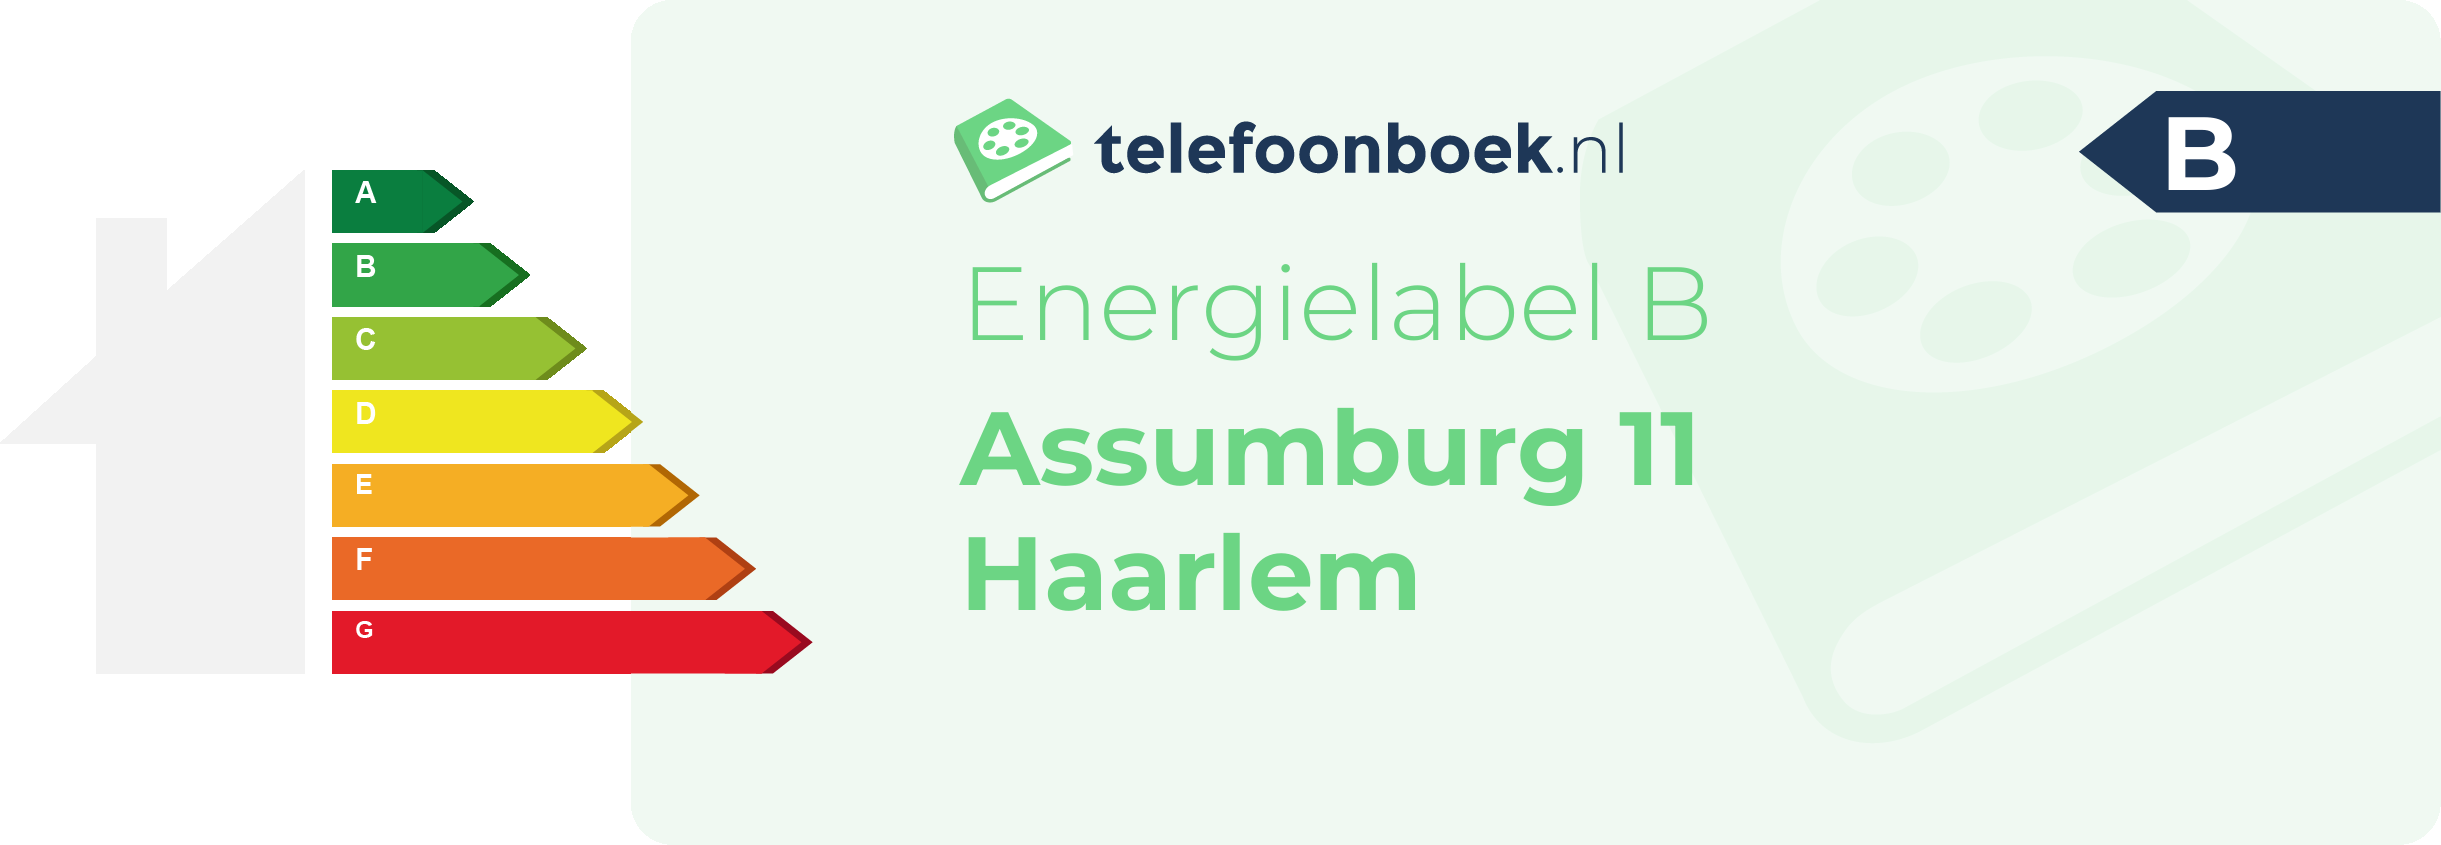 Energielabel Assumburg 11 Haarlem